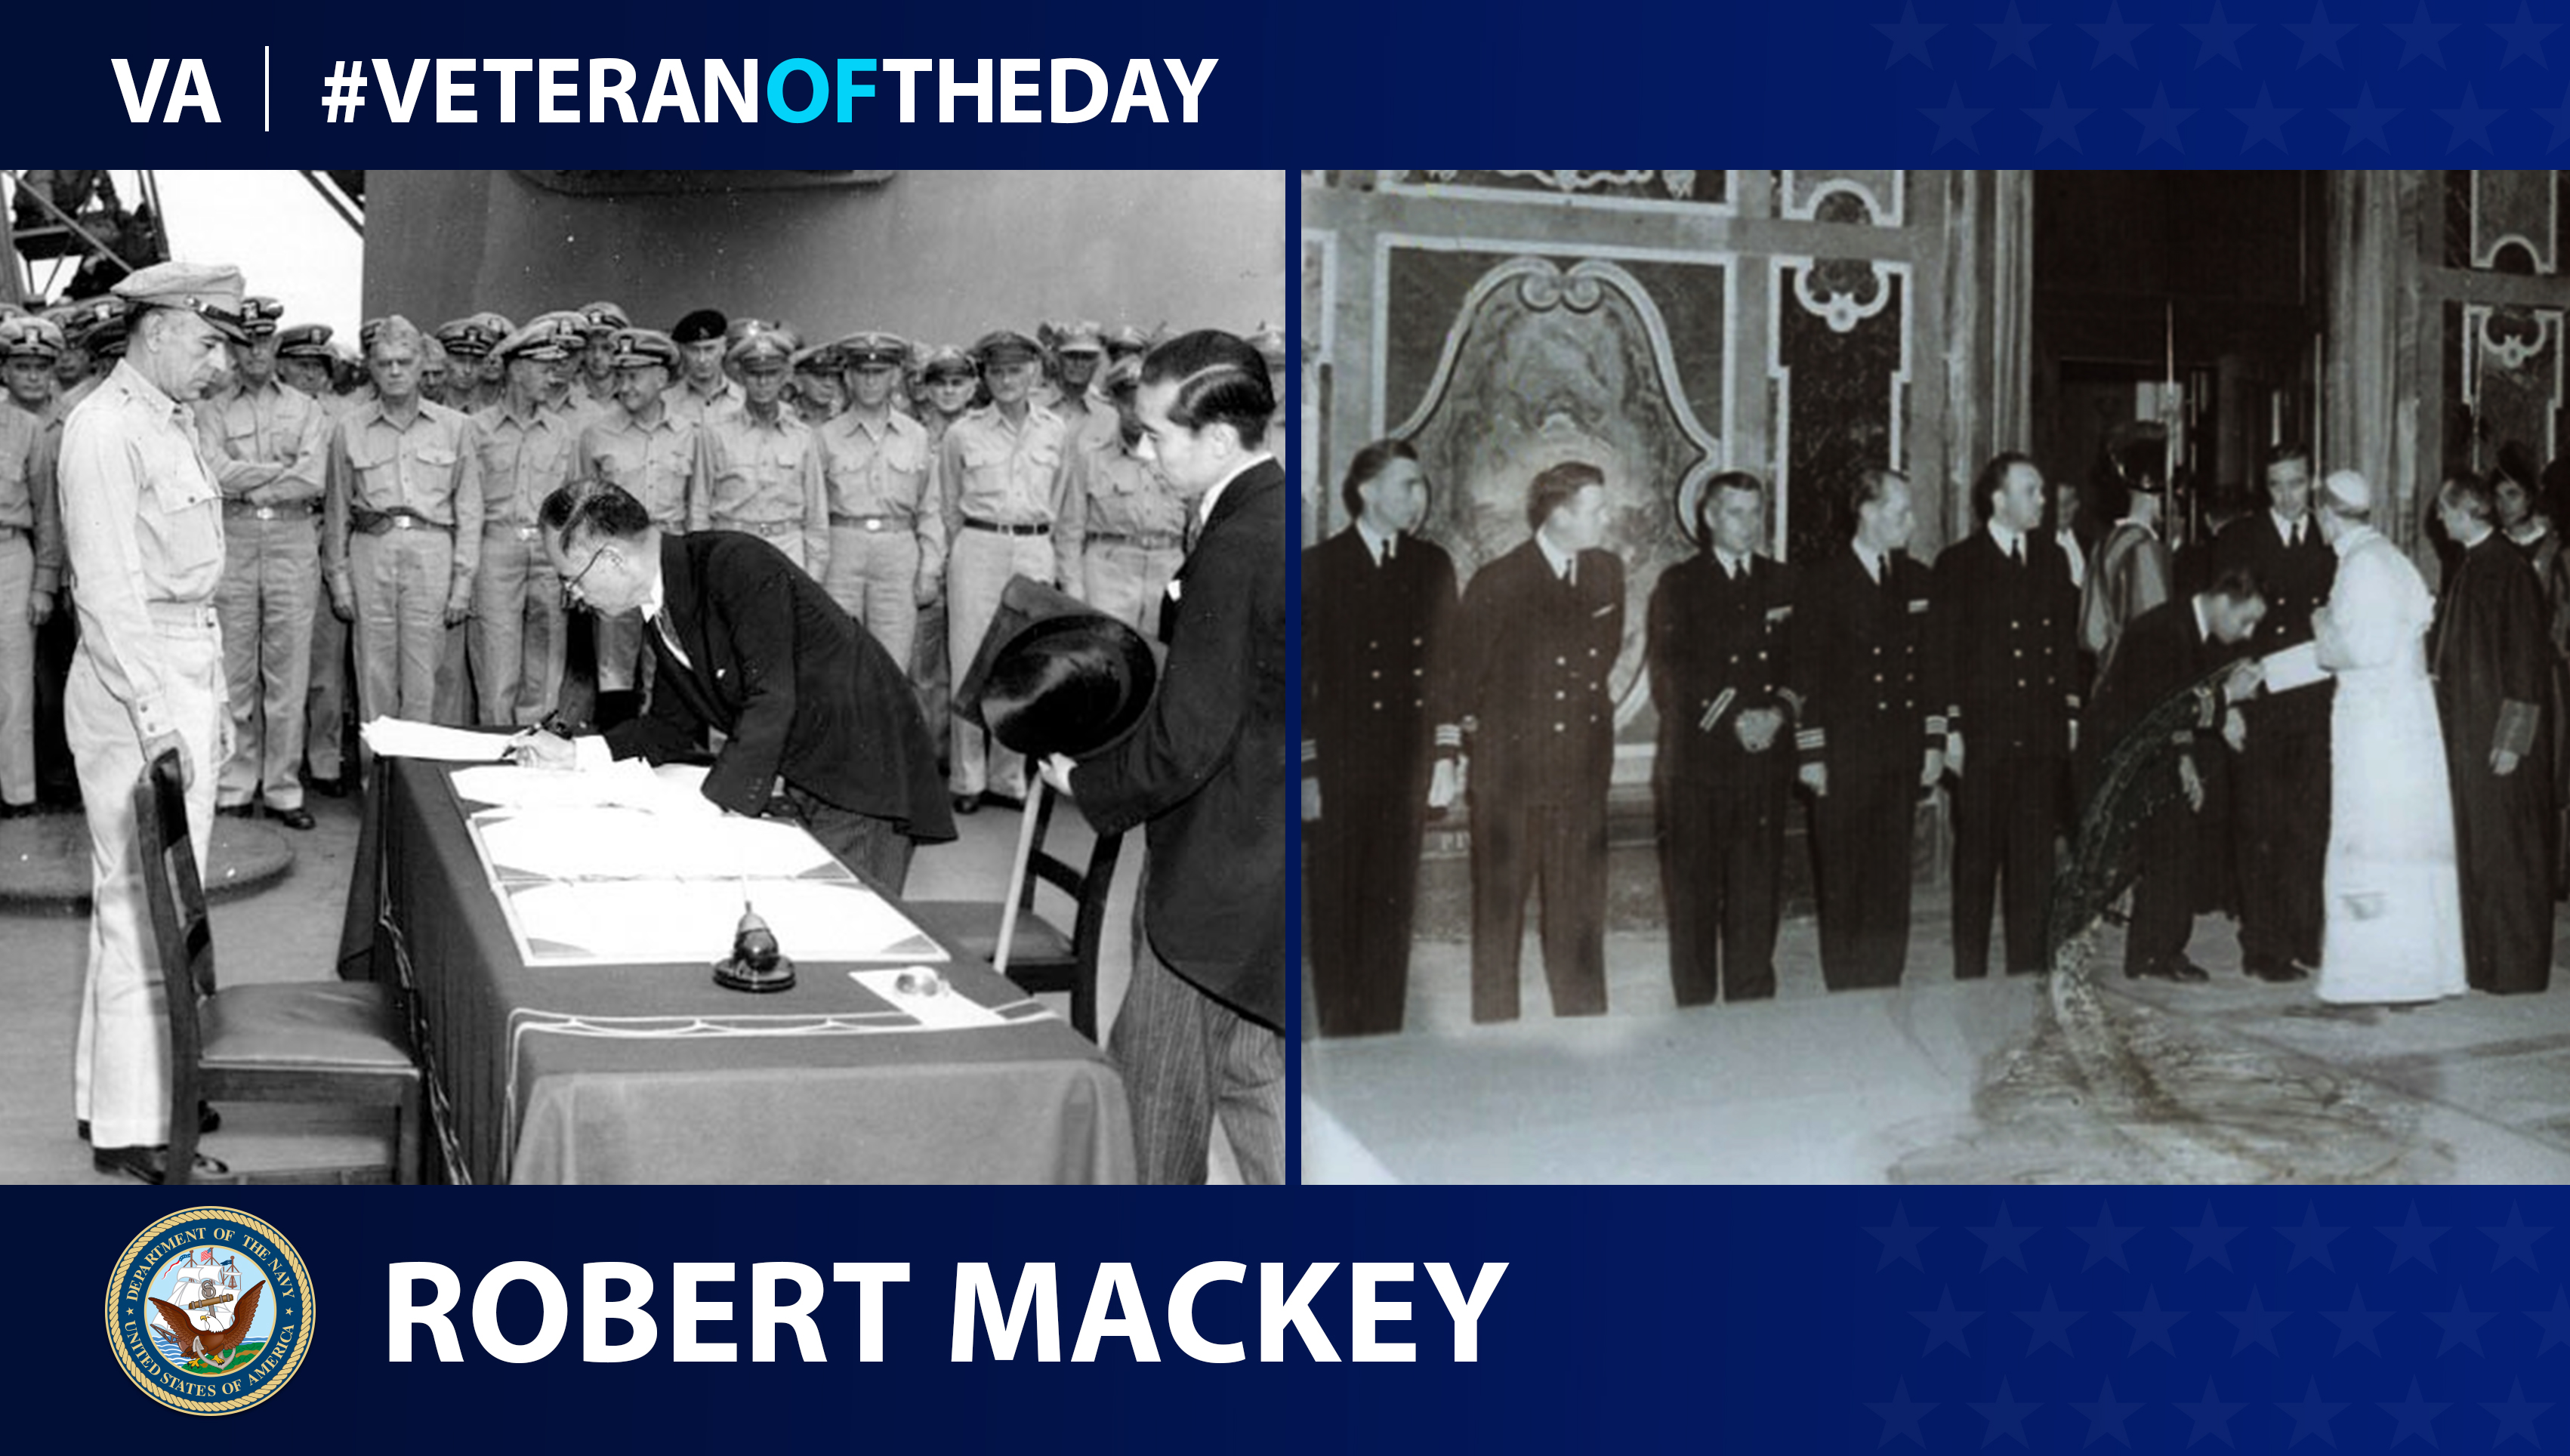 Navy Veteran Robert G. Mackey is today's Veteran of the Day.